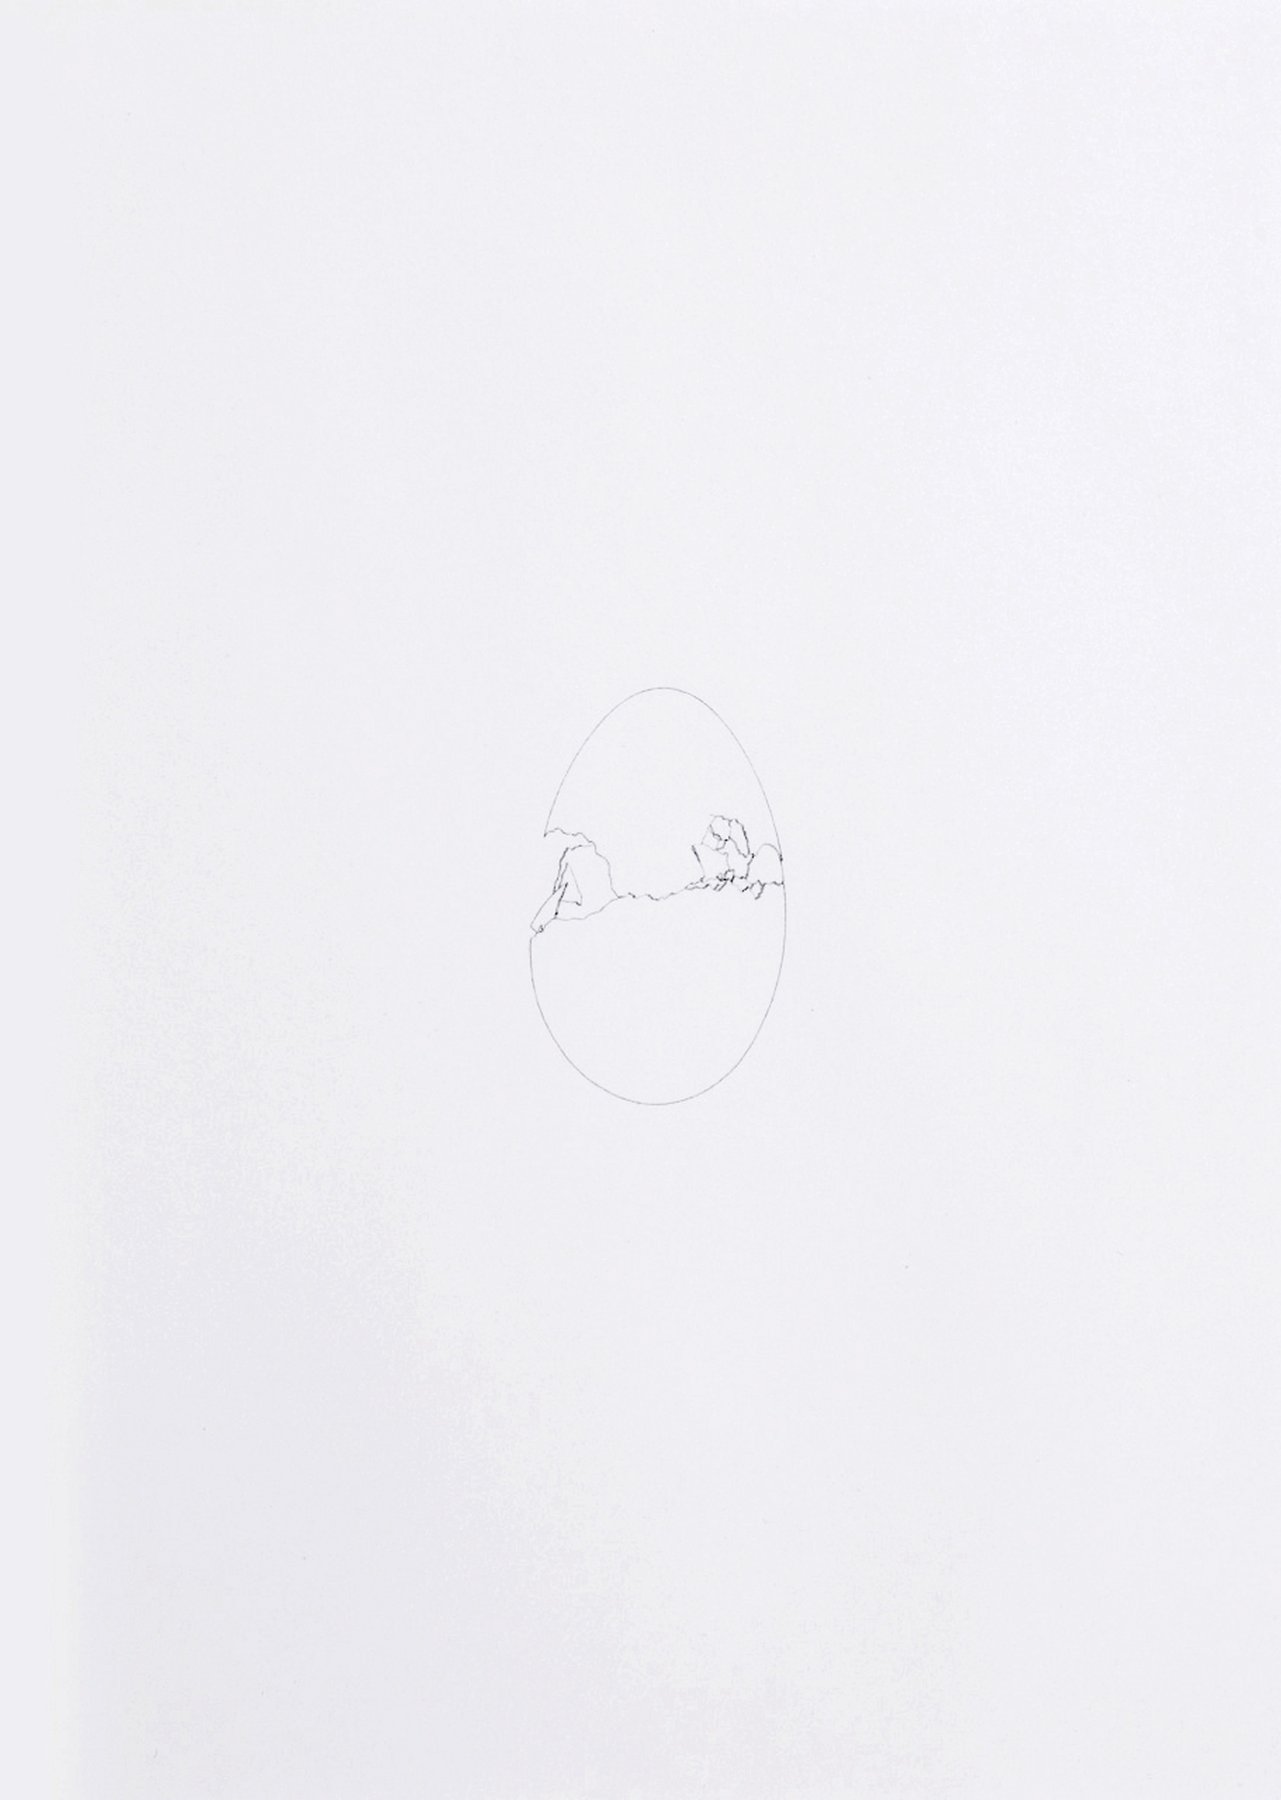 Giovanni De Lazzari Untitled, 2011 pencil on paper(series of 3 drawings) 22 × 30 cm; Trittico/triptych